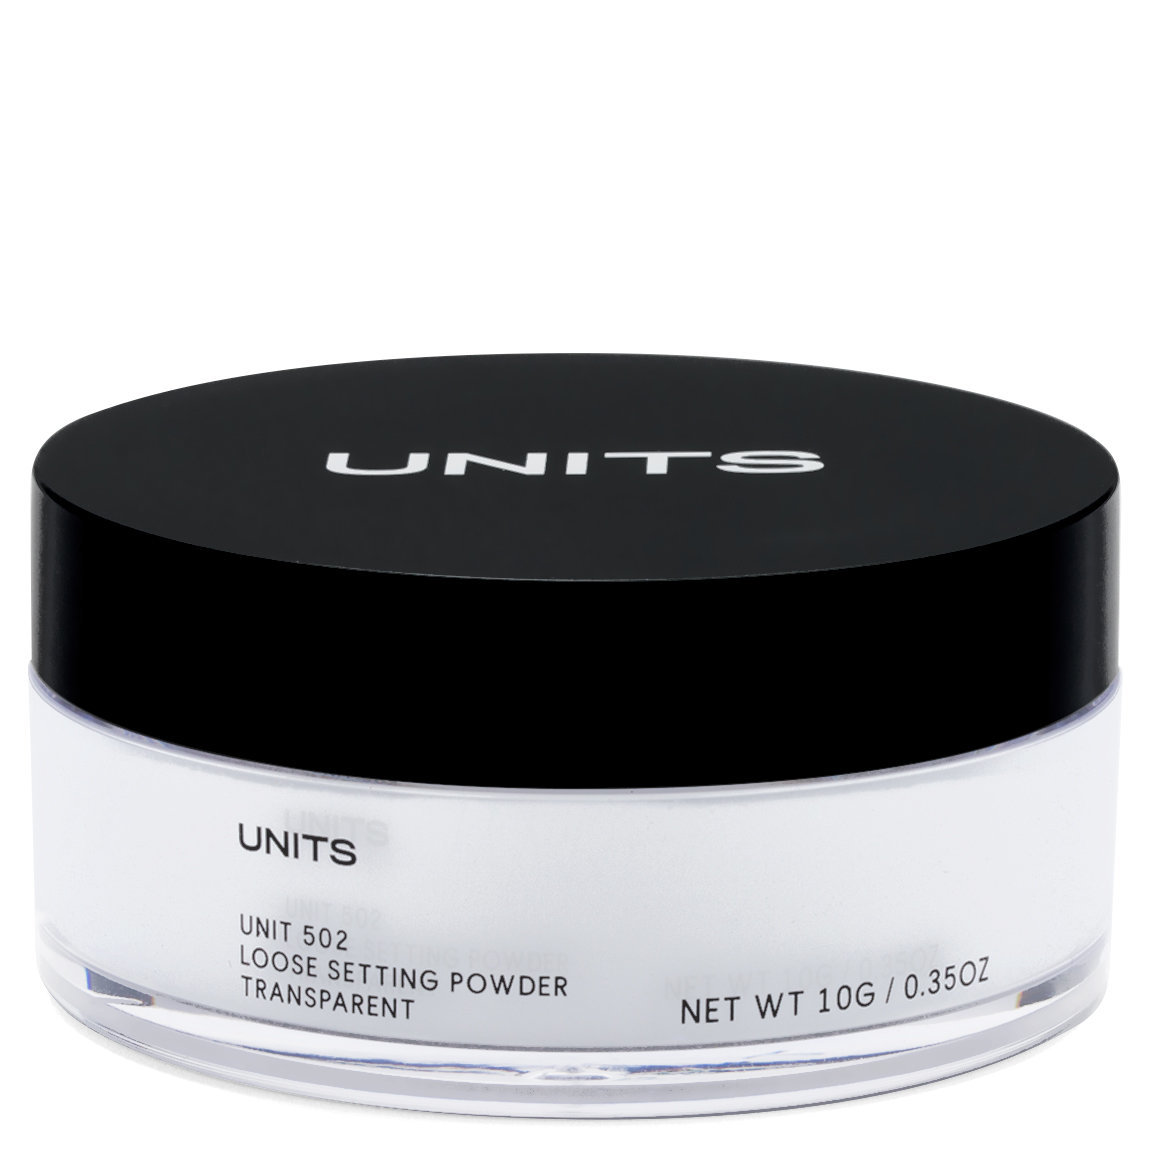 UNITS UNIT 502 Loose Setting Powder alternative view 1 - product swatch.